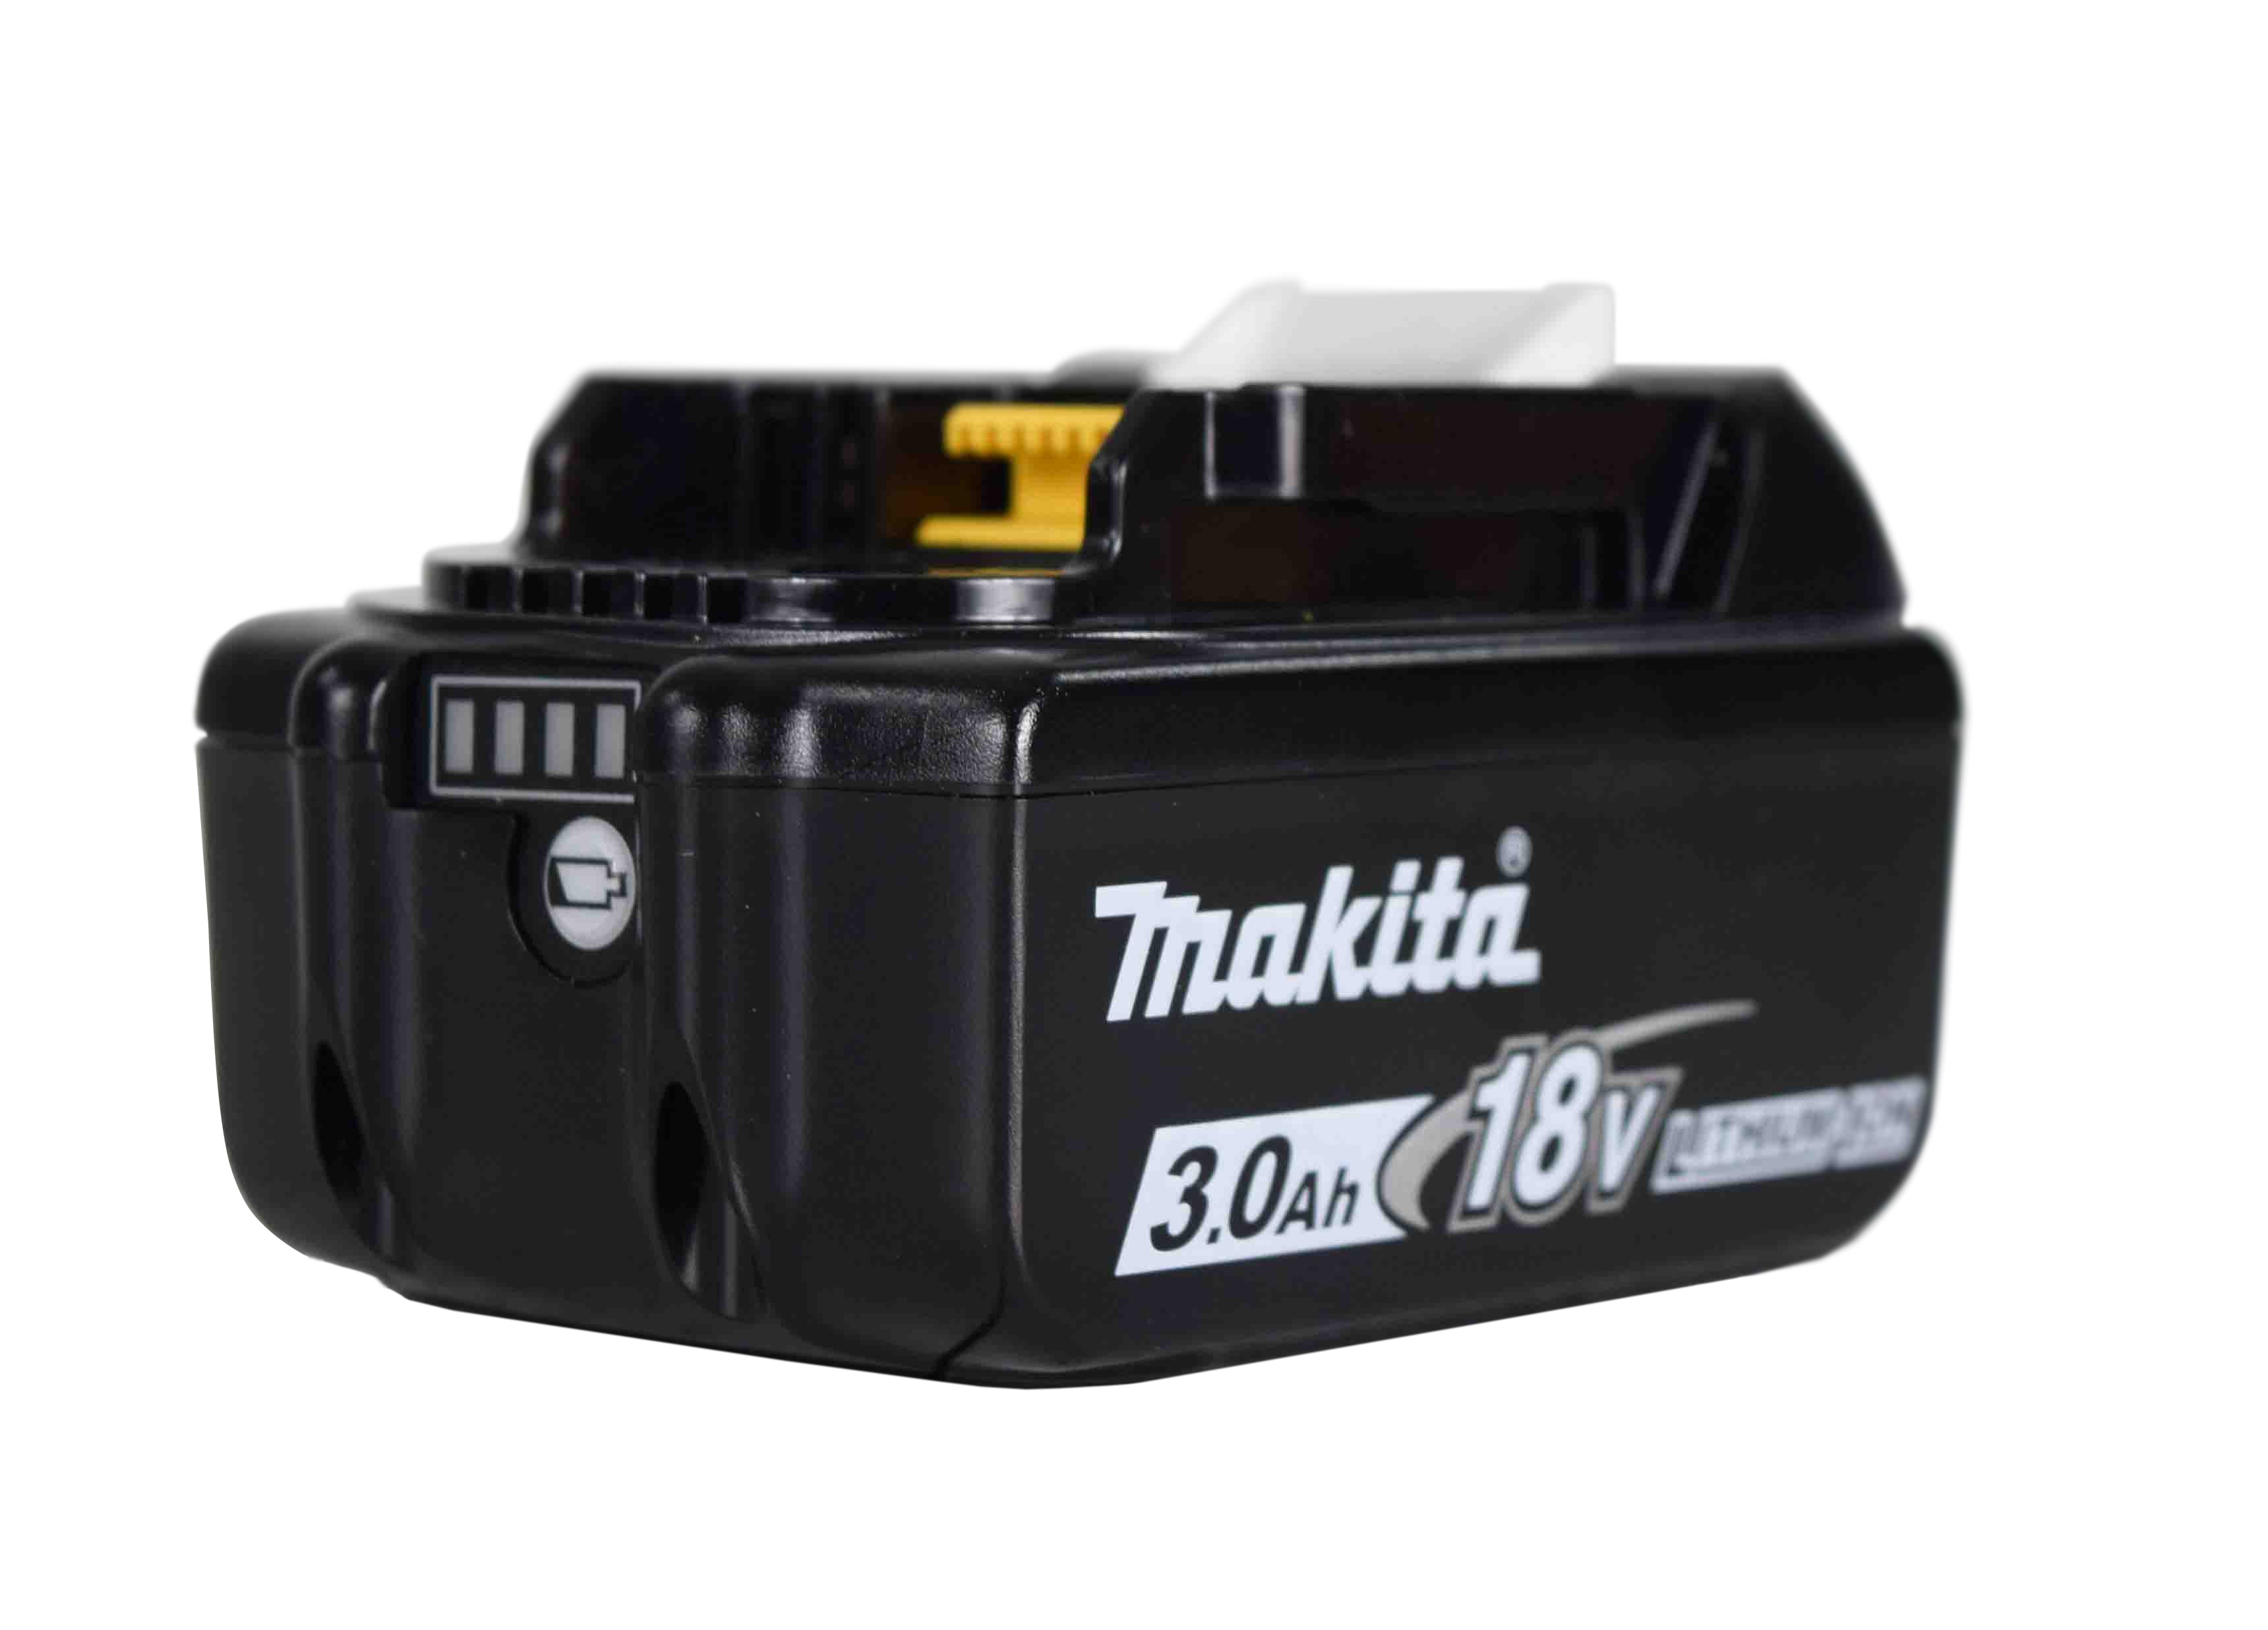 Print Rædsel knap Makita 18V LXT Lithium-Ion Battery Packs 3.0Ah with Fuel Gauge BL1830B - 2  pack - Walmart.com